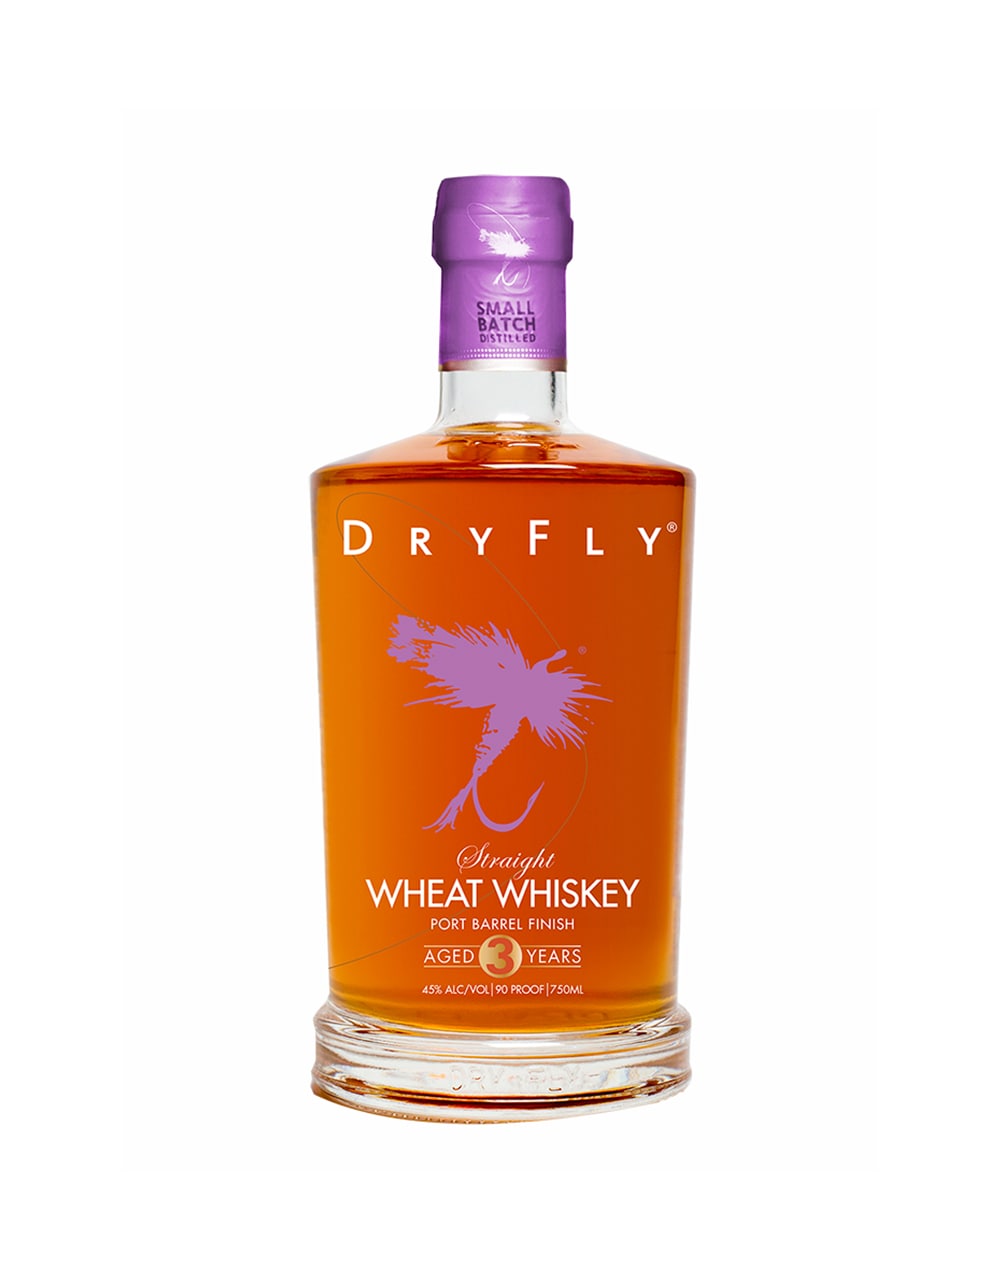 Dry Fly Straight PORT BARREL FINISH Wheat Whisky